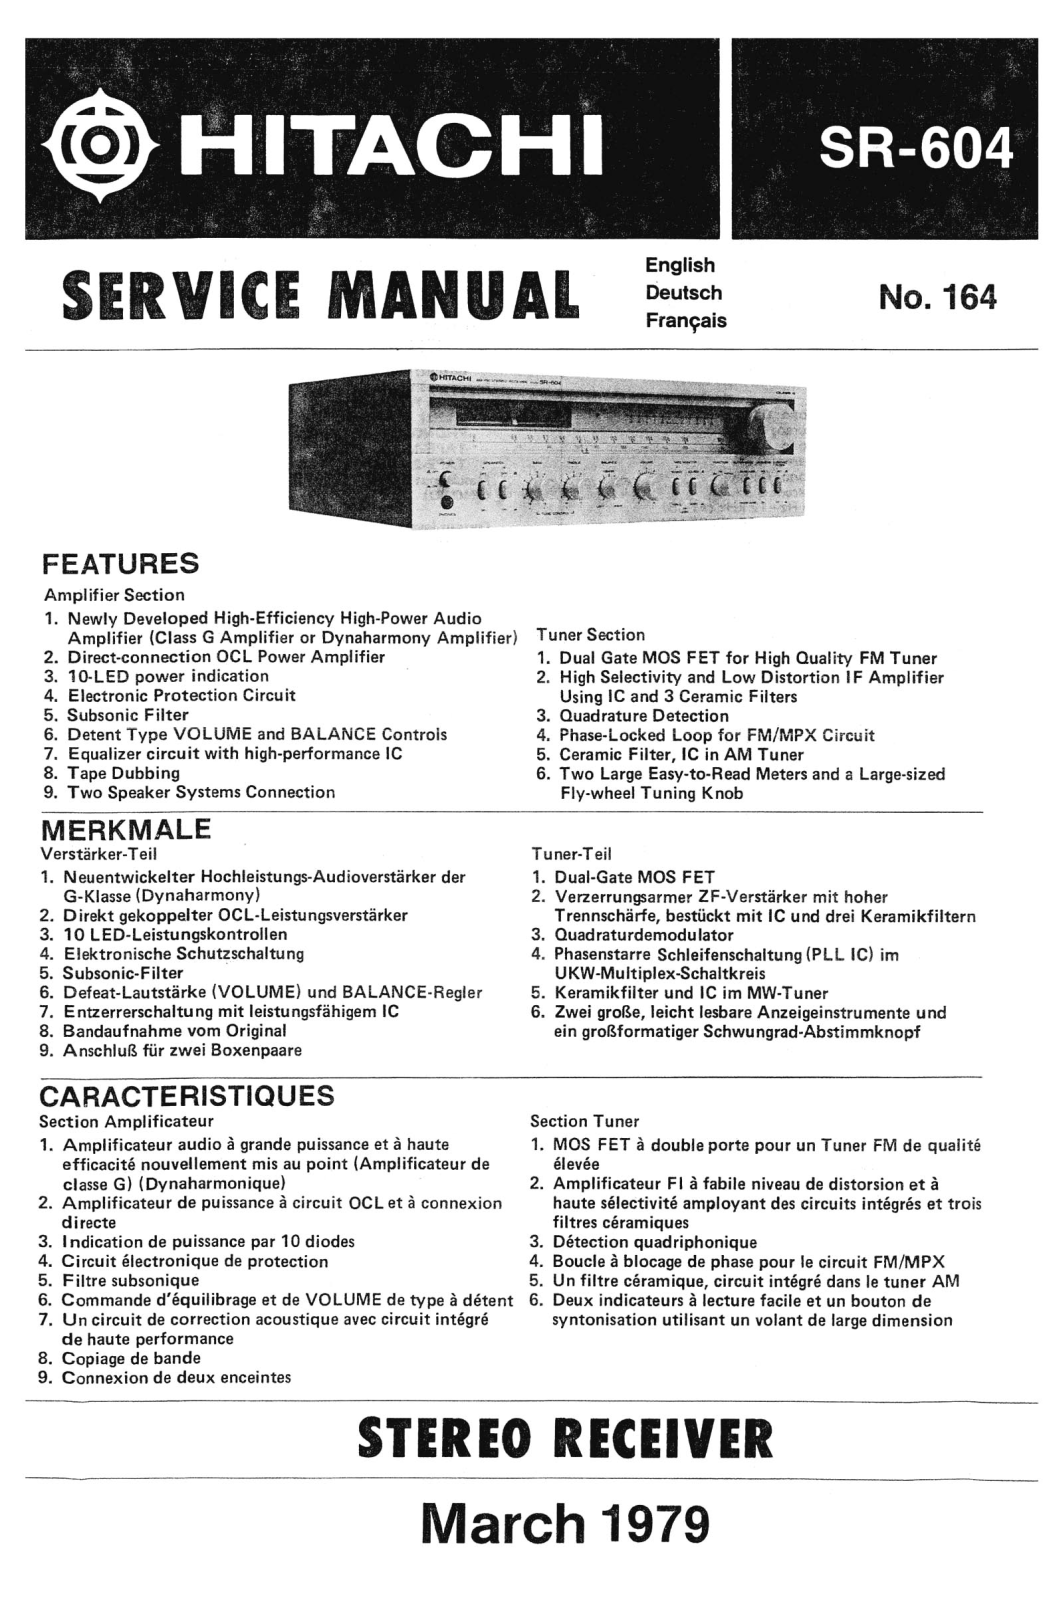 Hitachi SR-604 Service Manual